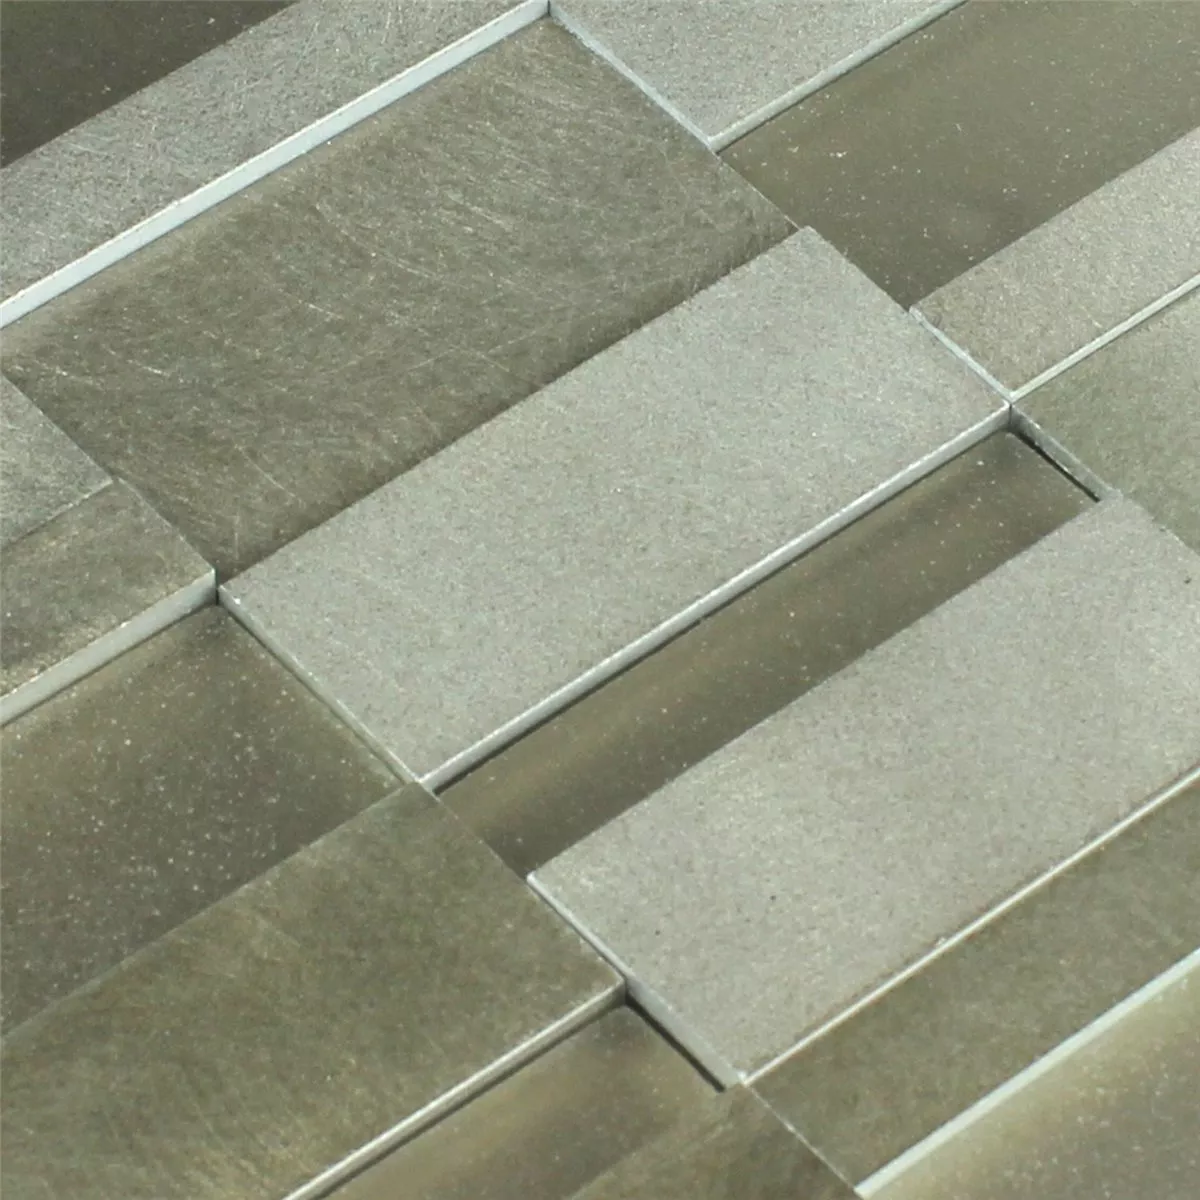 Sample Mosaic Tiles Glass Metal Mud Mix